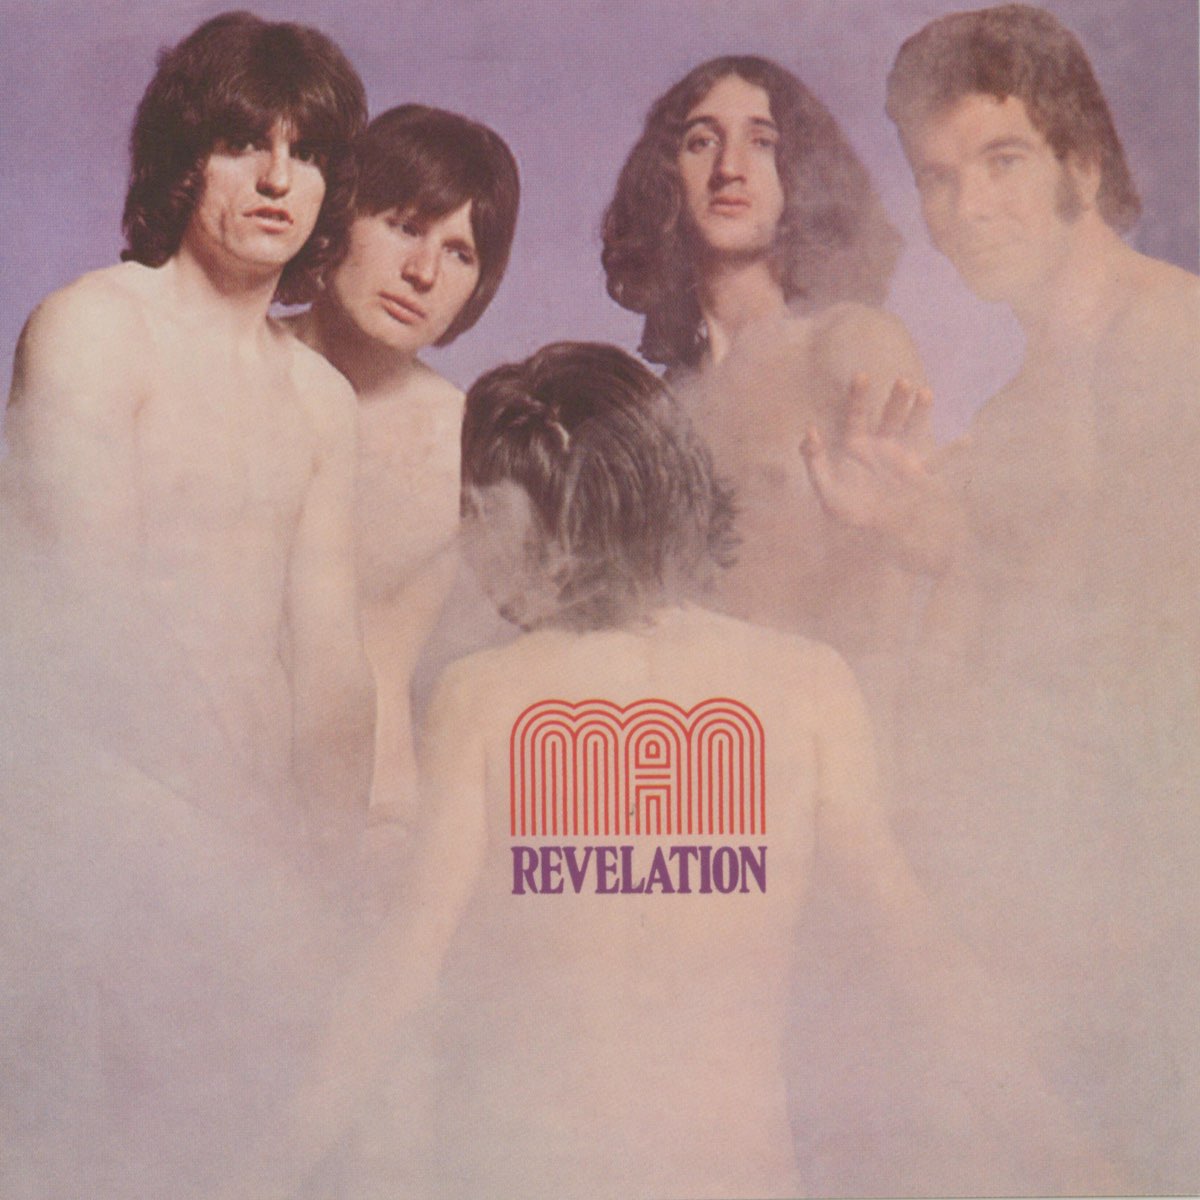 Revelation - Album by Man - Apple Music